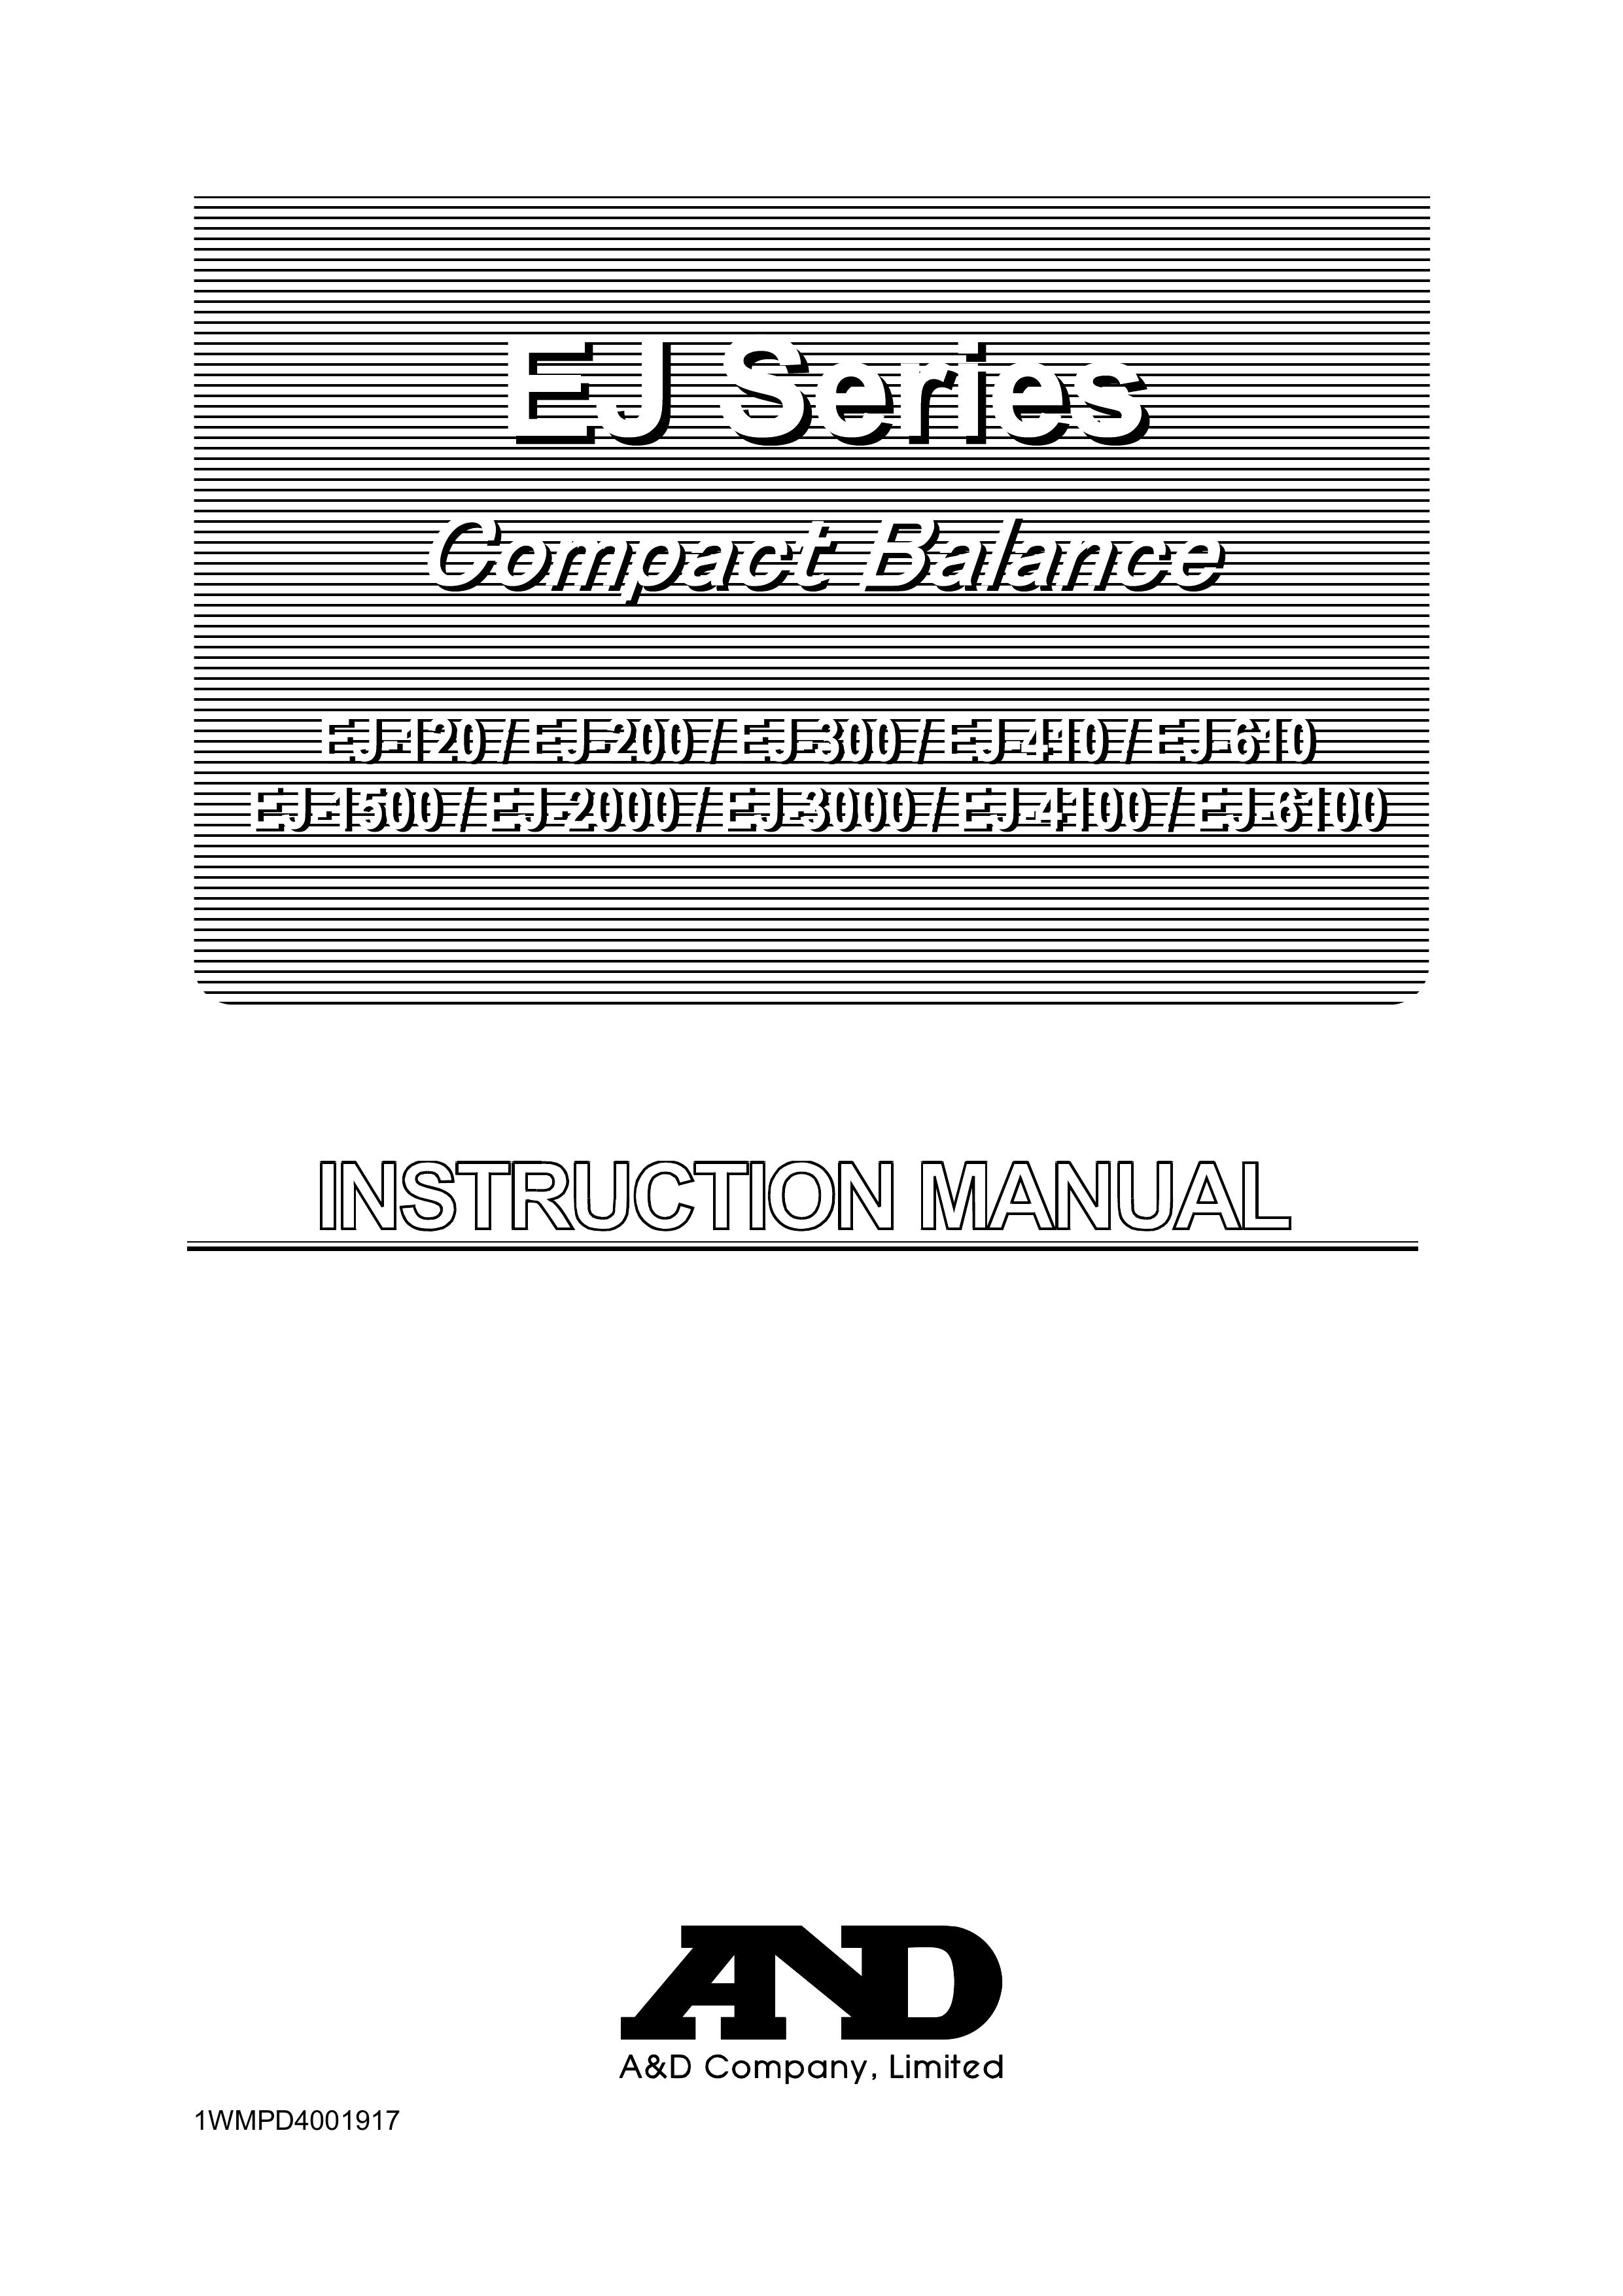 A&D EJ-2000 Scale User Manual